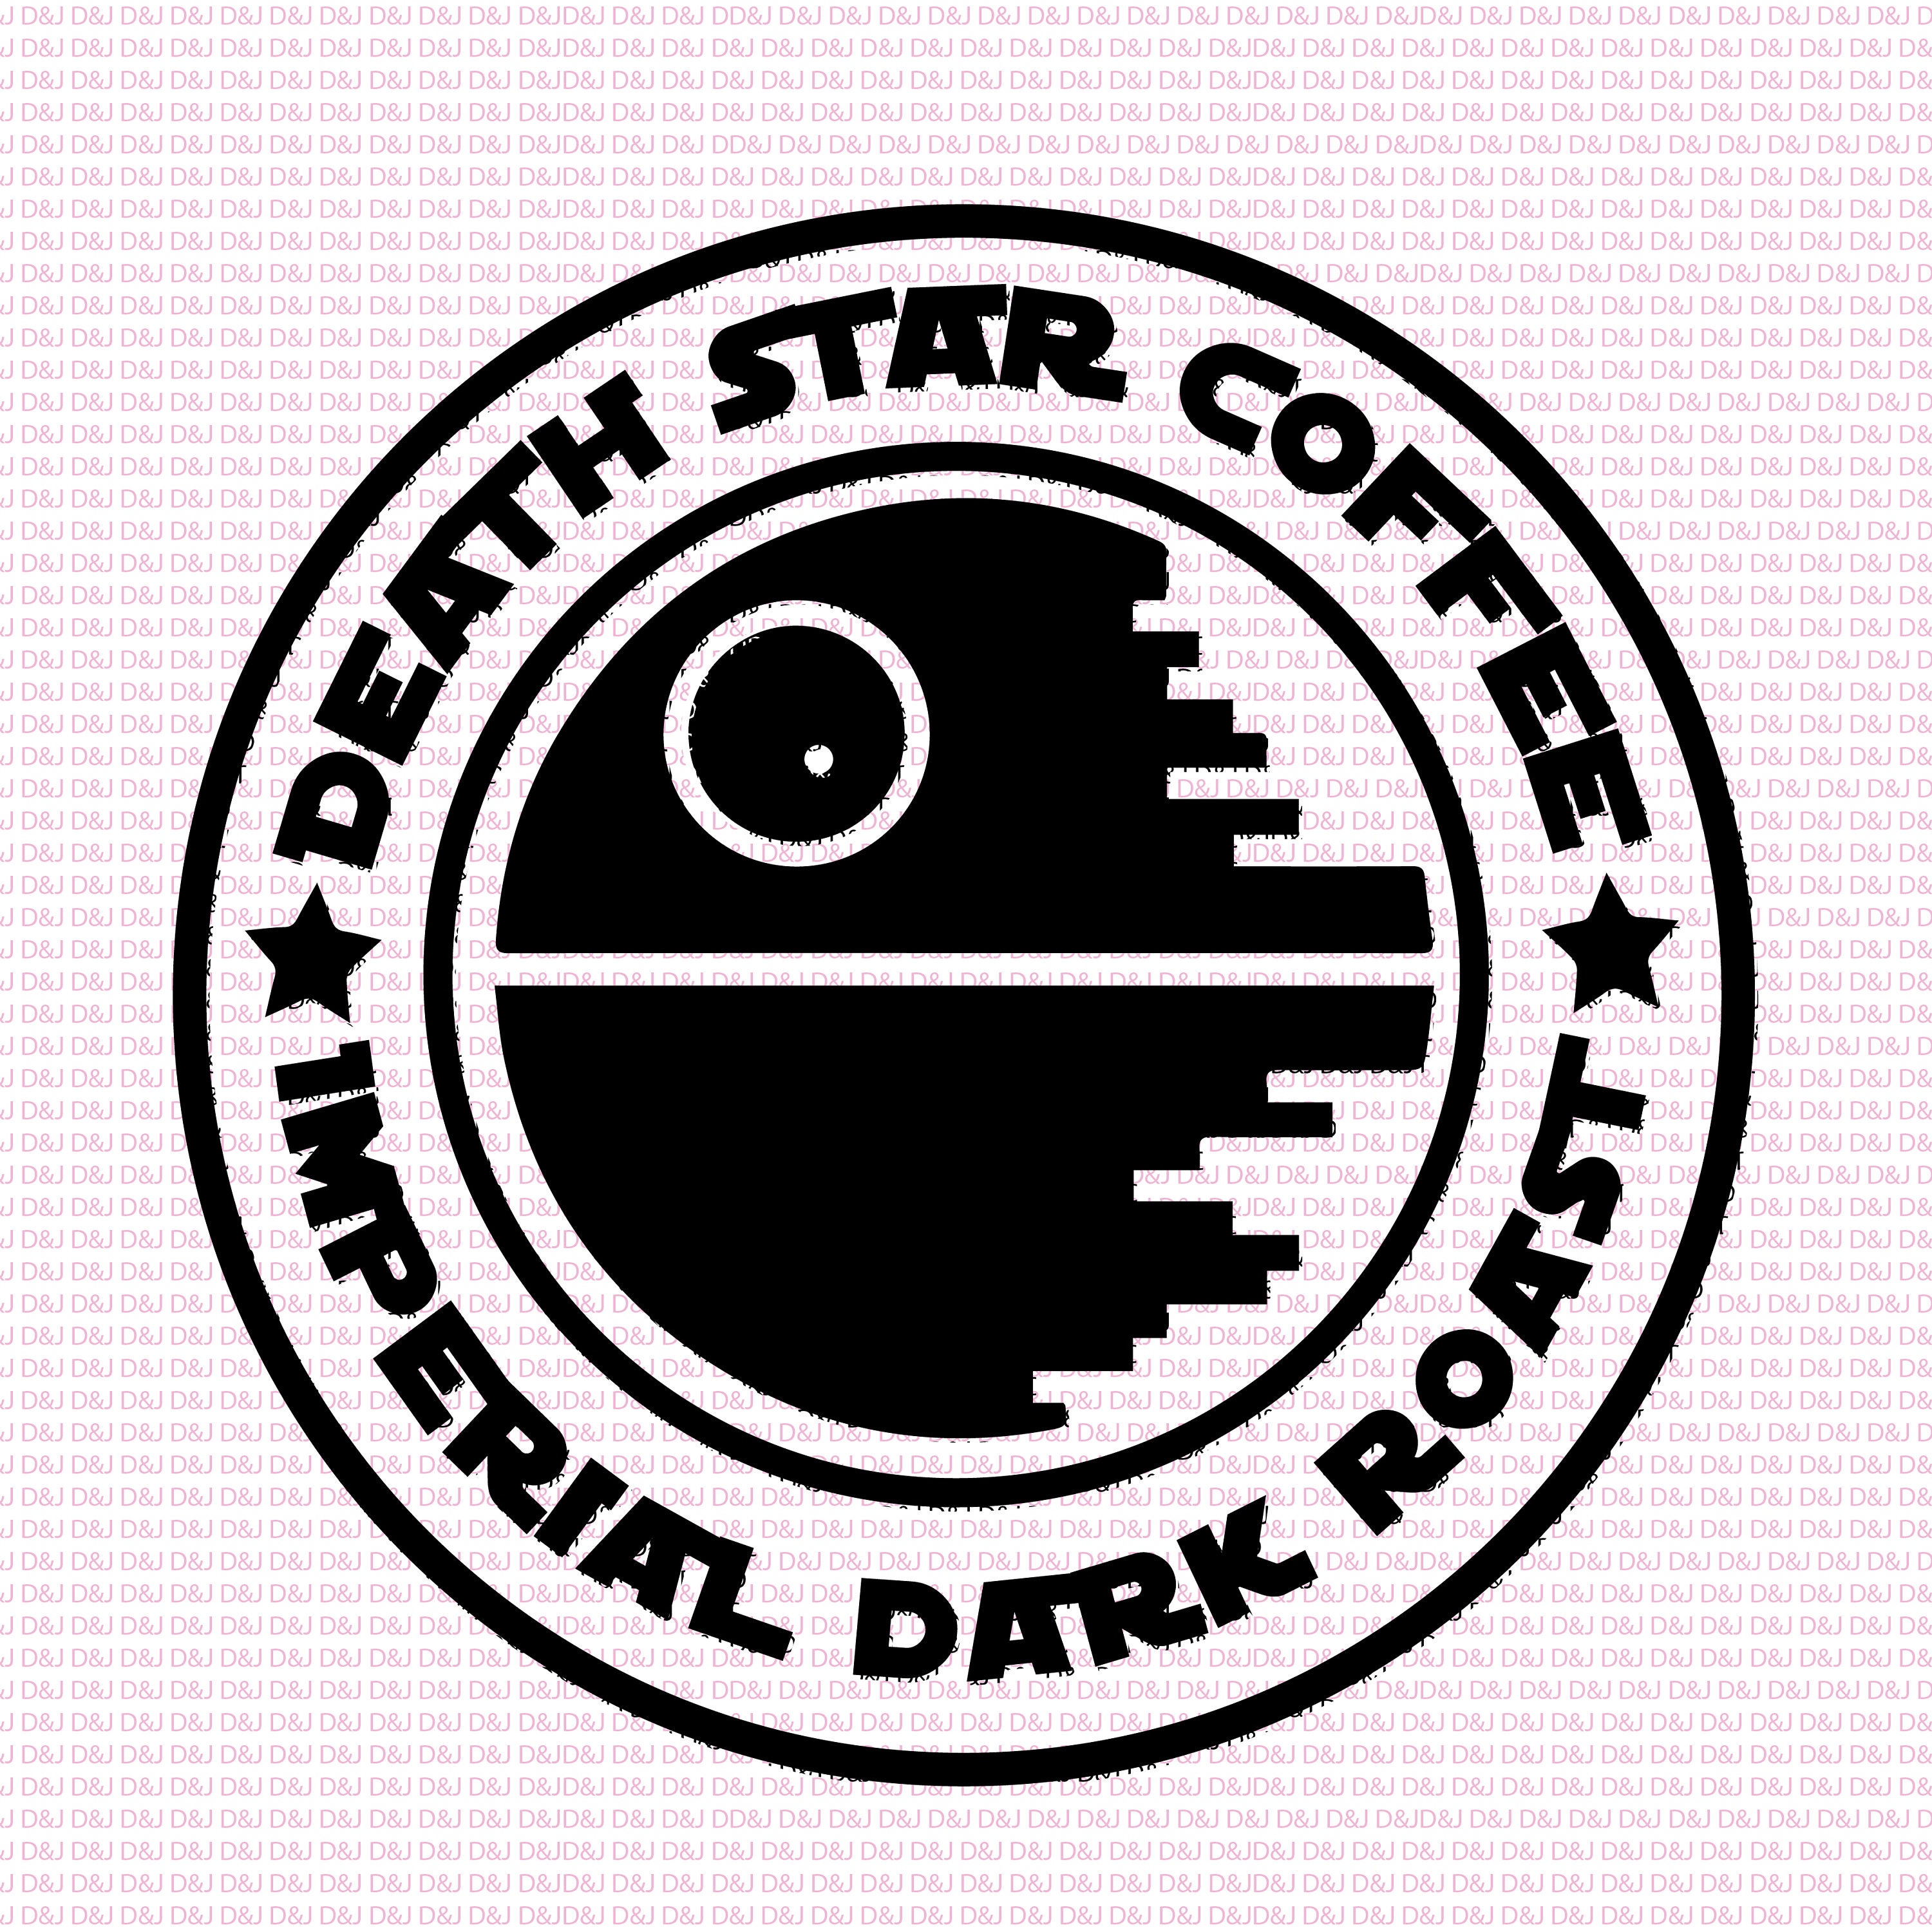 Star Wars Coffee/ Storm Trooper SVG/PNG/PDF/jpeg Files for Cricut,  Silhouette Studio, Cutting Machines, scrapbooking, vinyl,stencil, t shirt